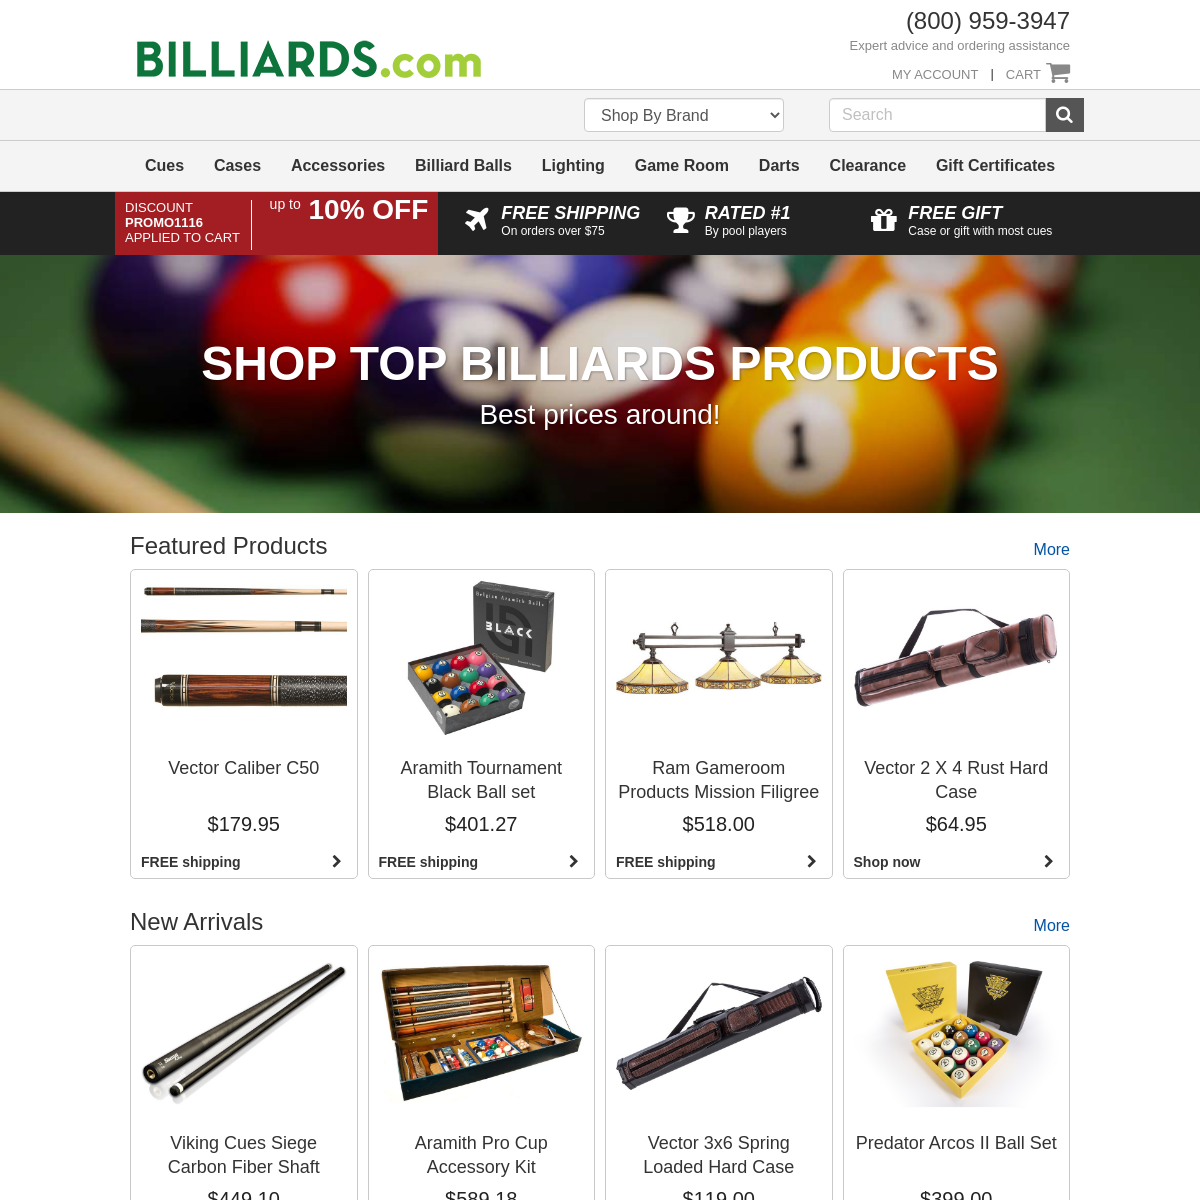 A complete backup of billiards.com